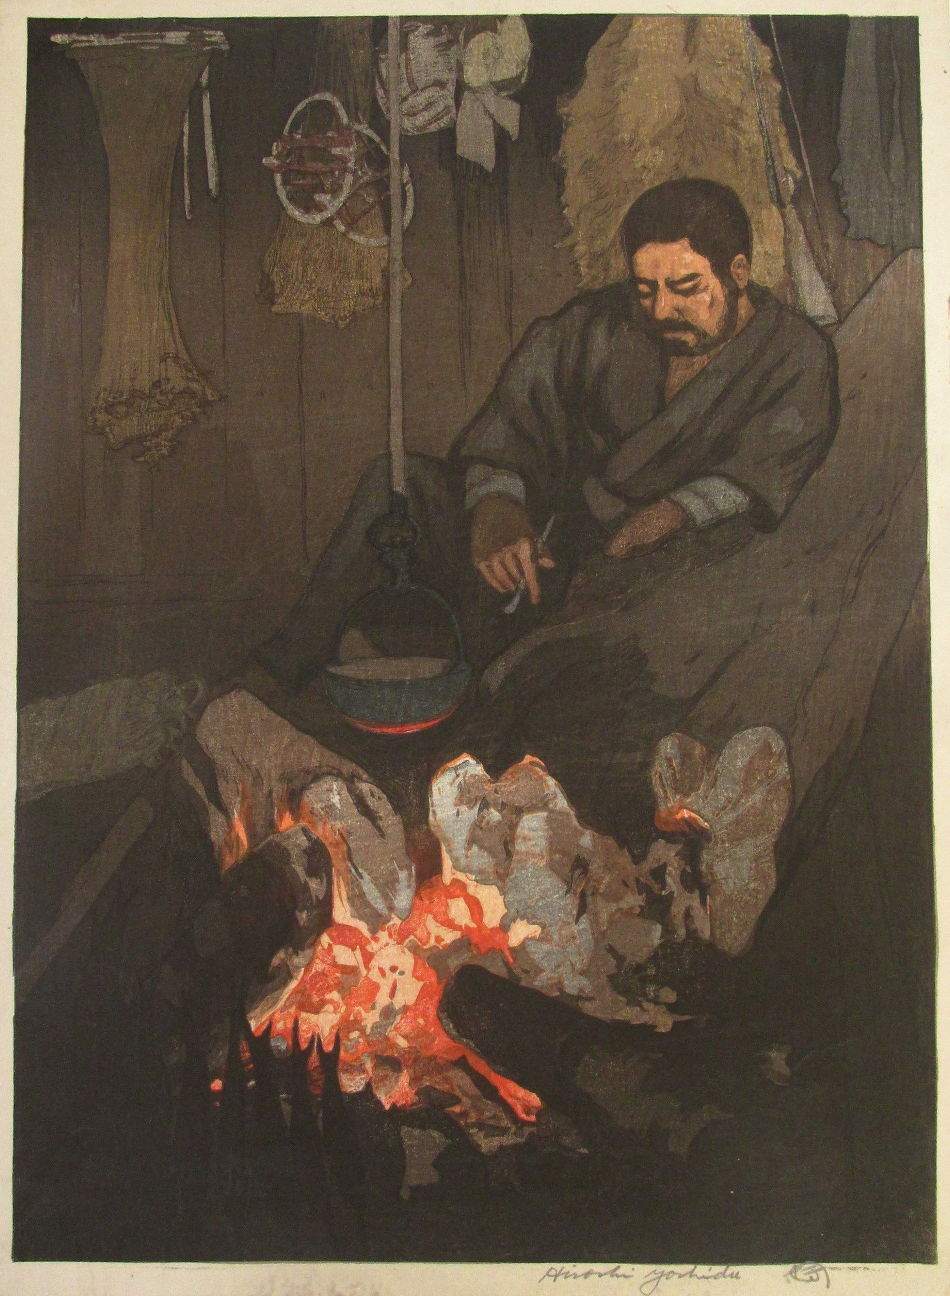 Hiroshi Yoshida “A Hunter's Story” 1922 woodblock print